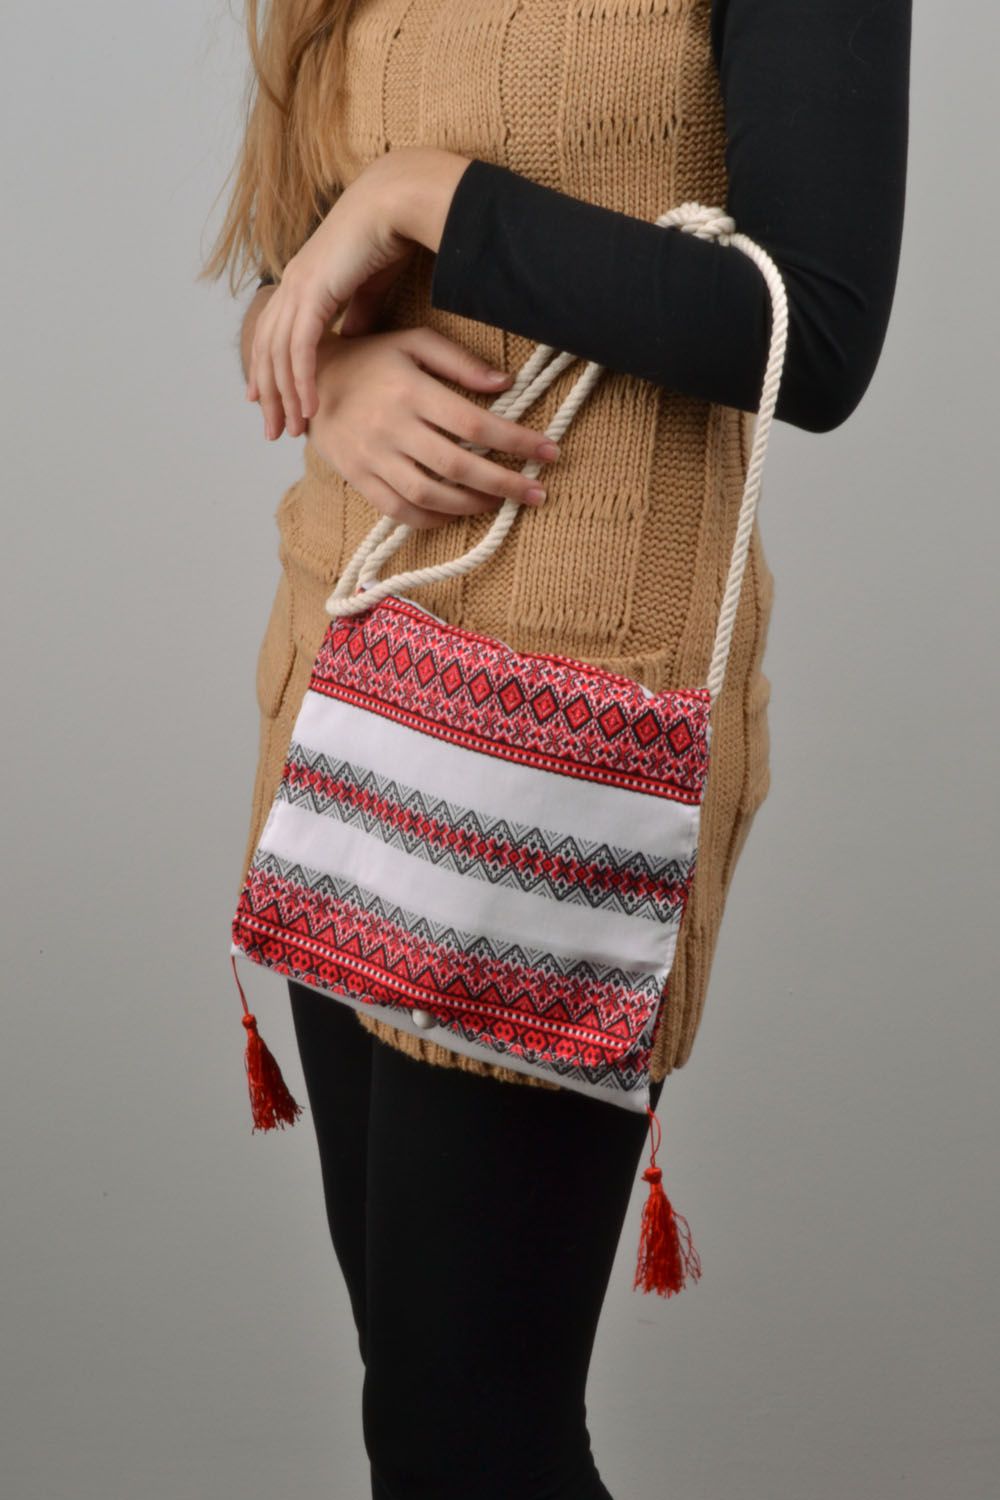 Shoulder bag in ethnic style photo 1